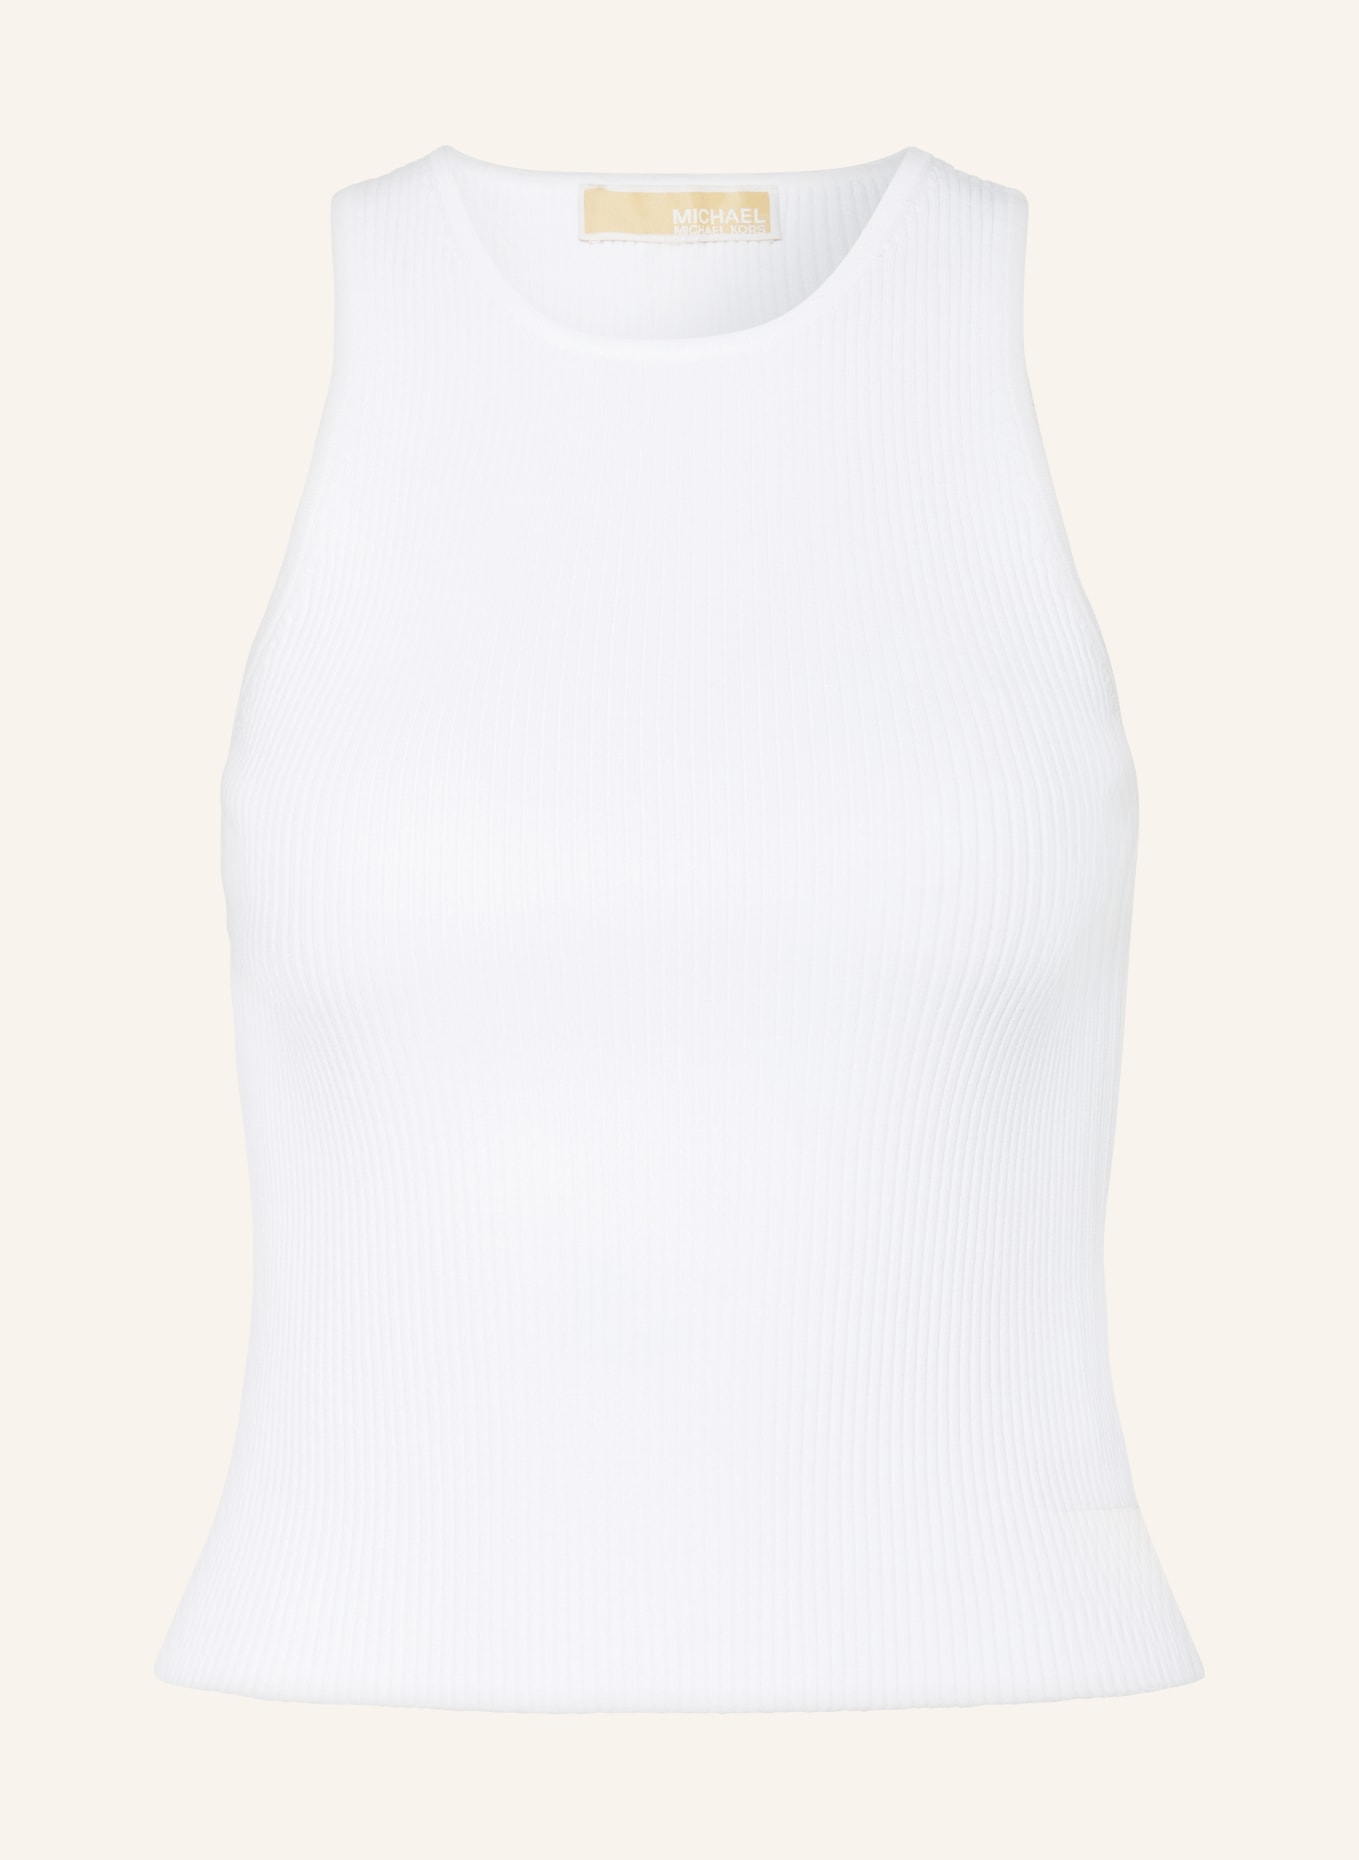 MICHAEL KORS Knit top, Color: WHITE (Image 1)